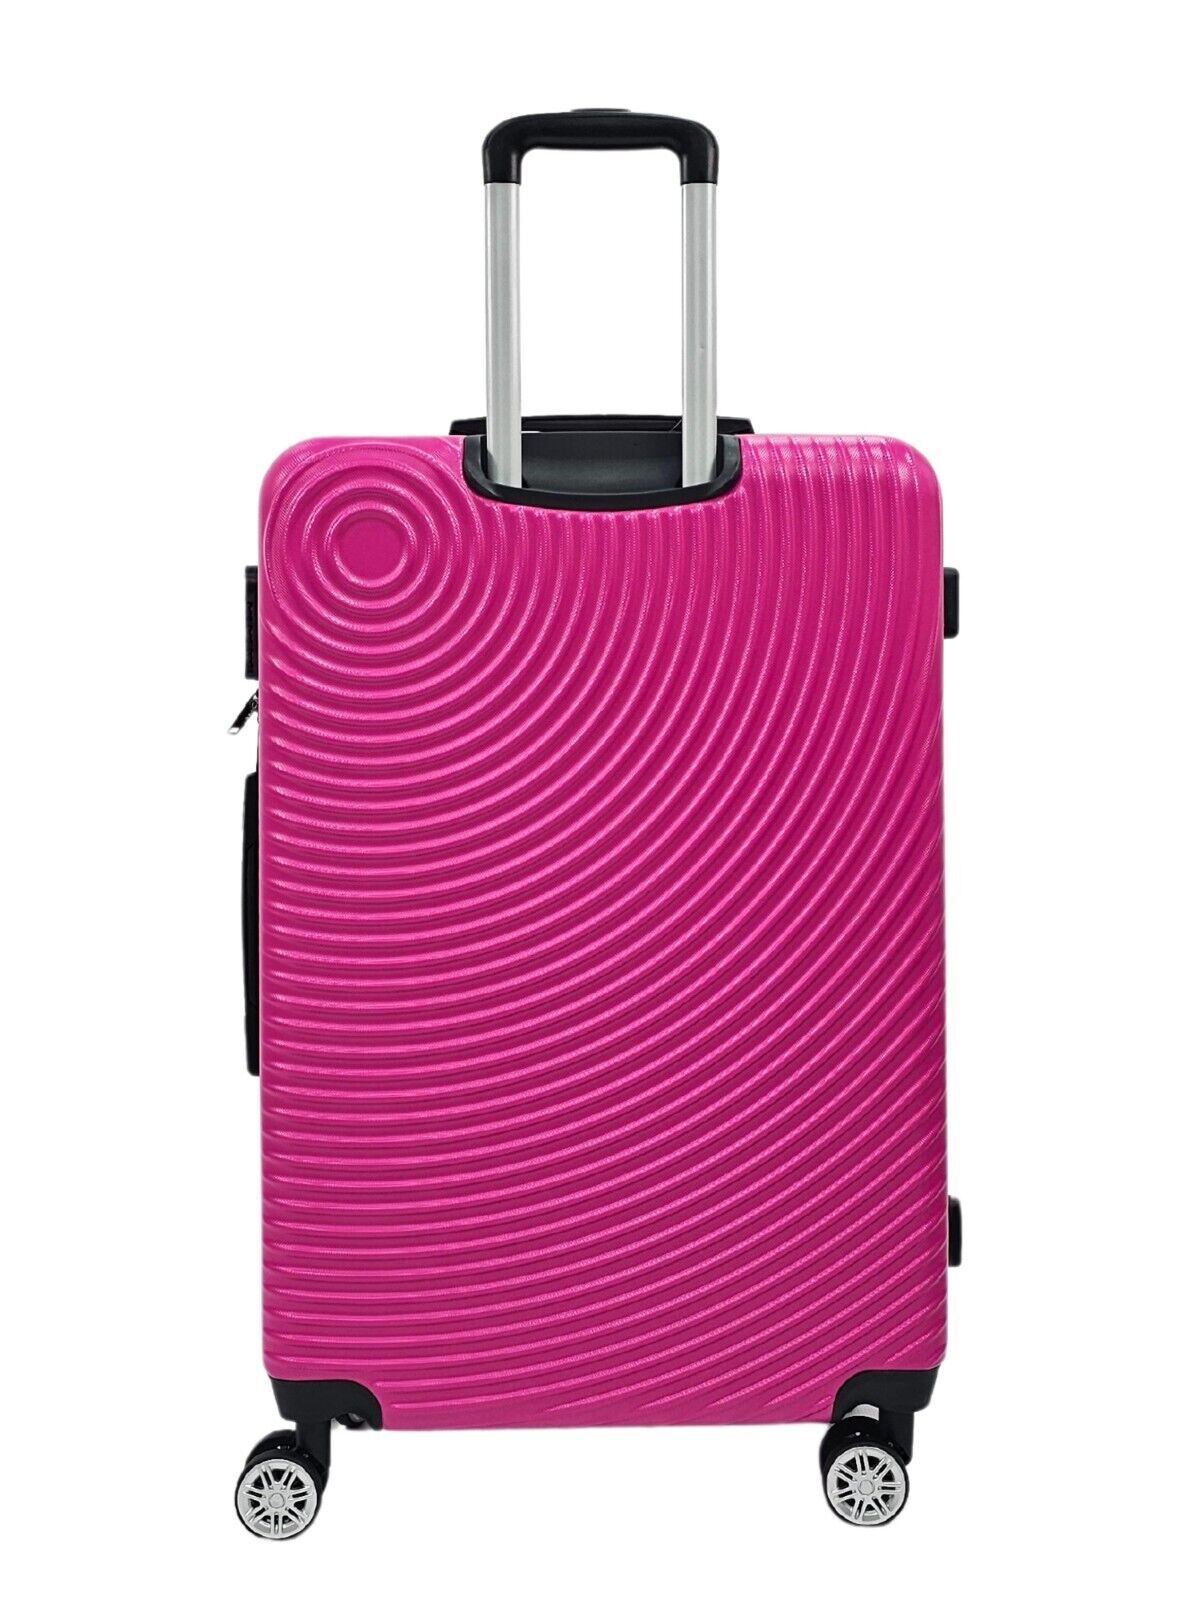 Hard Shell Fuschia Cabin Suitcase Set 8 Wheel Luggage Case Travel Bag